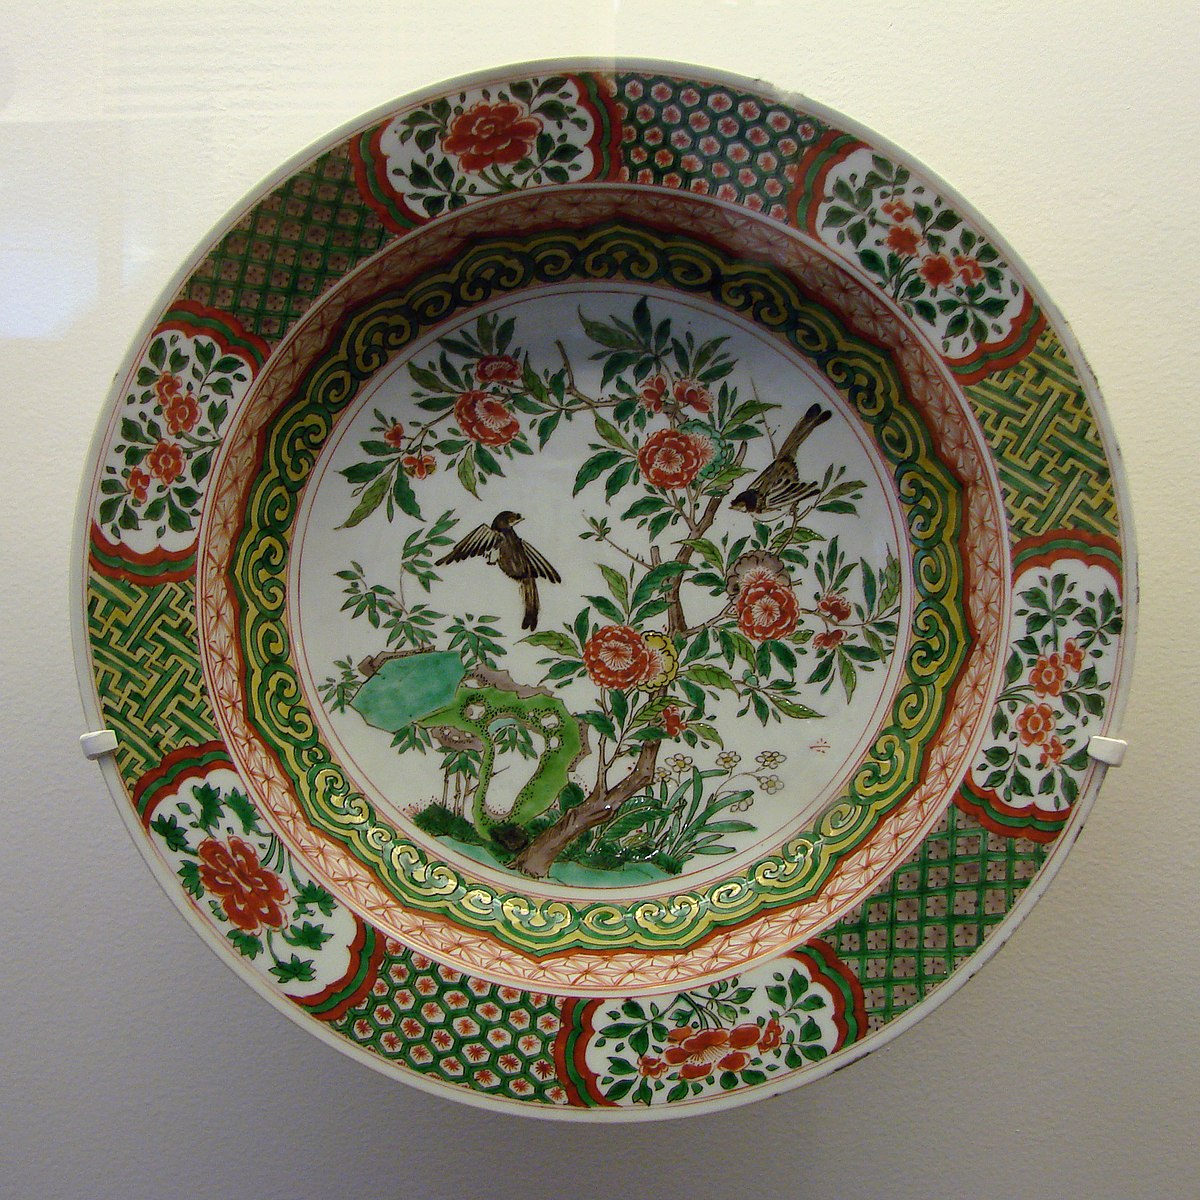 Porcelain plate with birds in flower shrubs